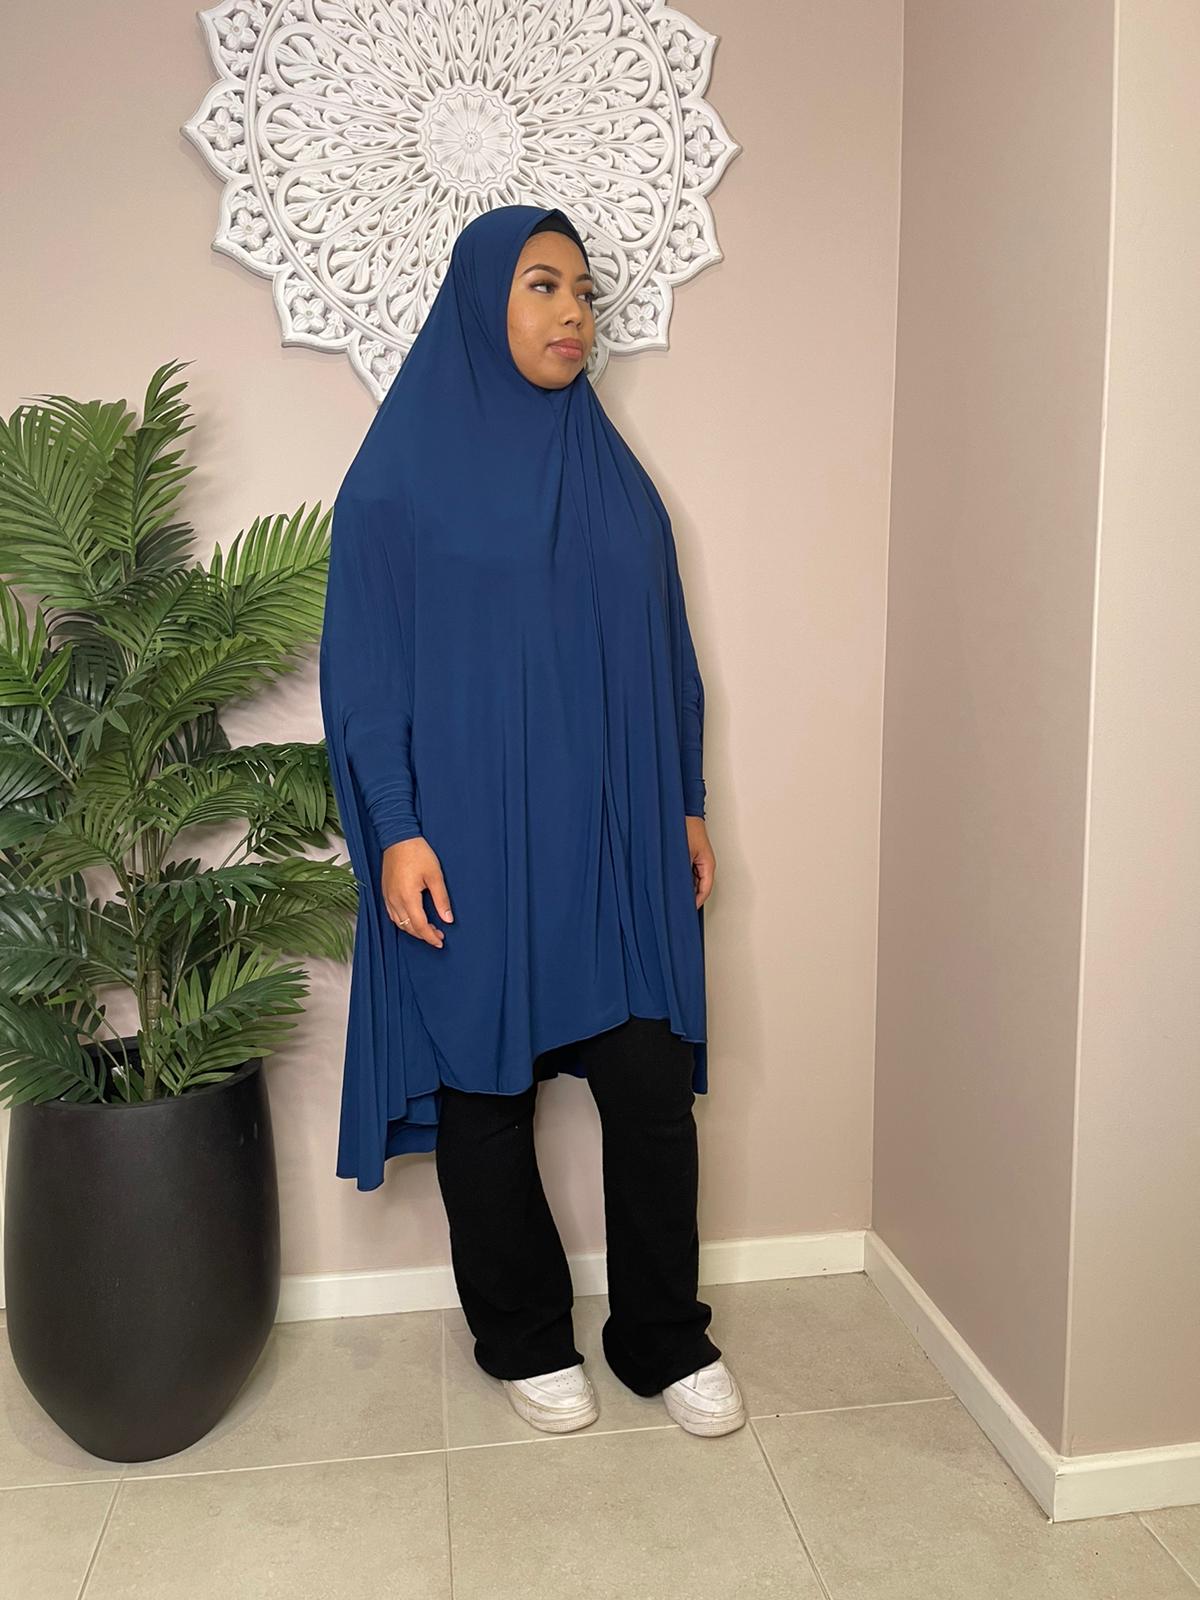 teal sleeved jilbab